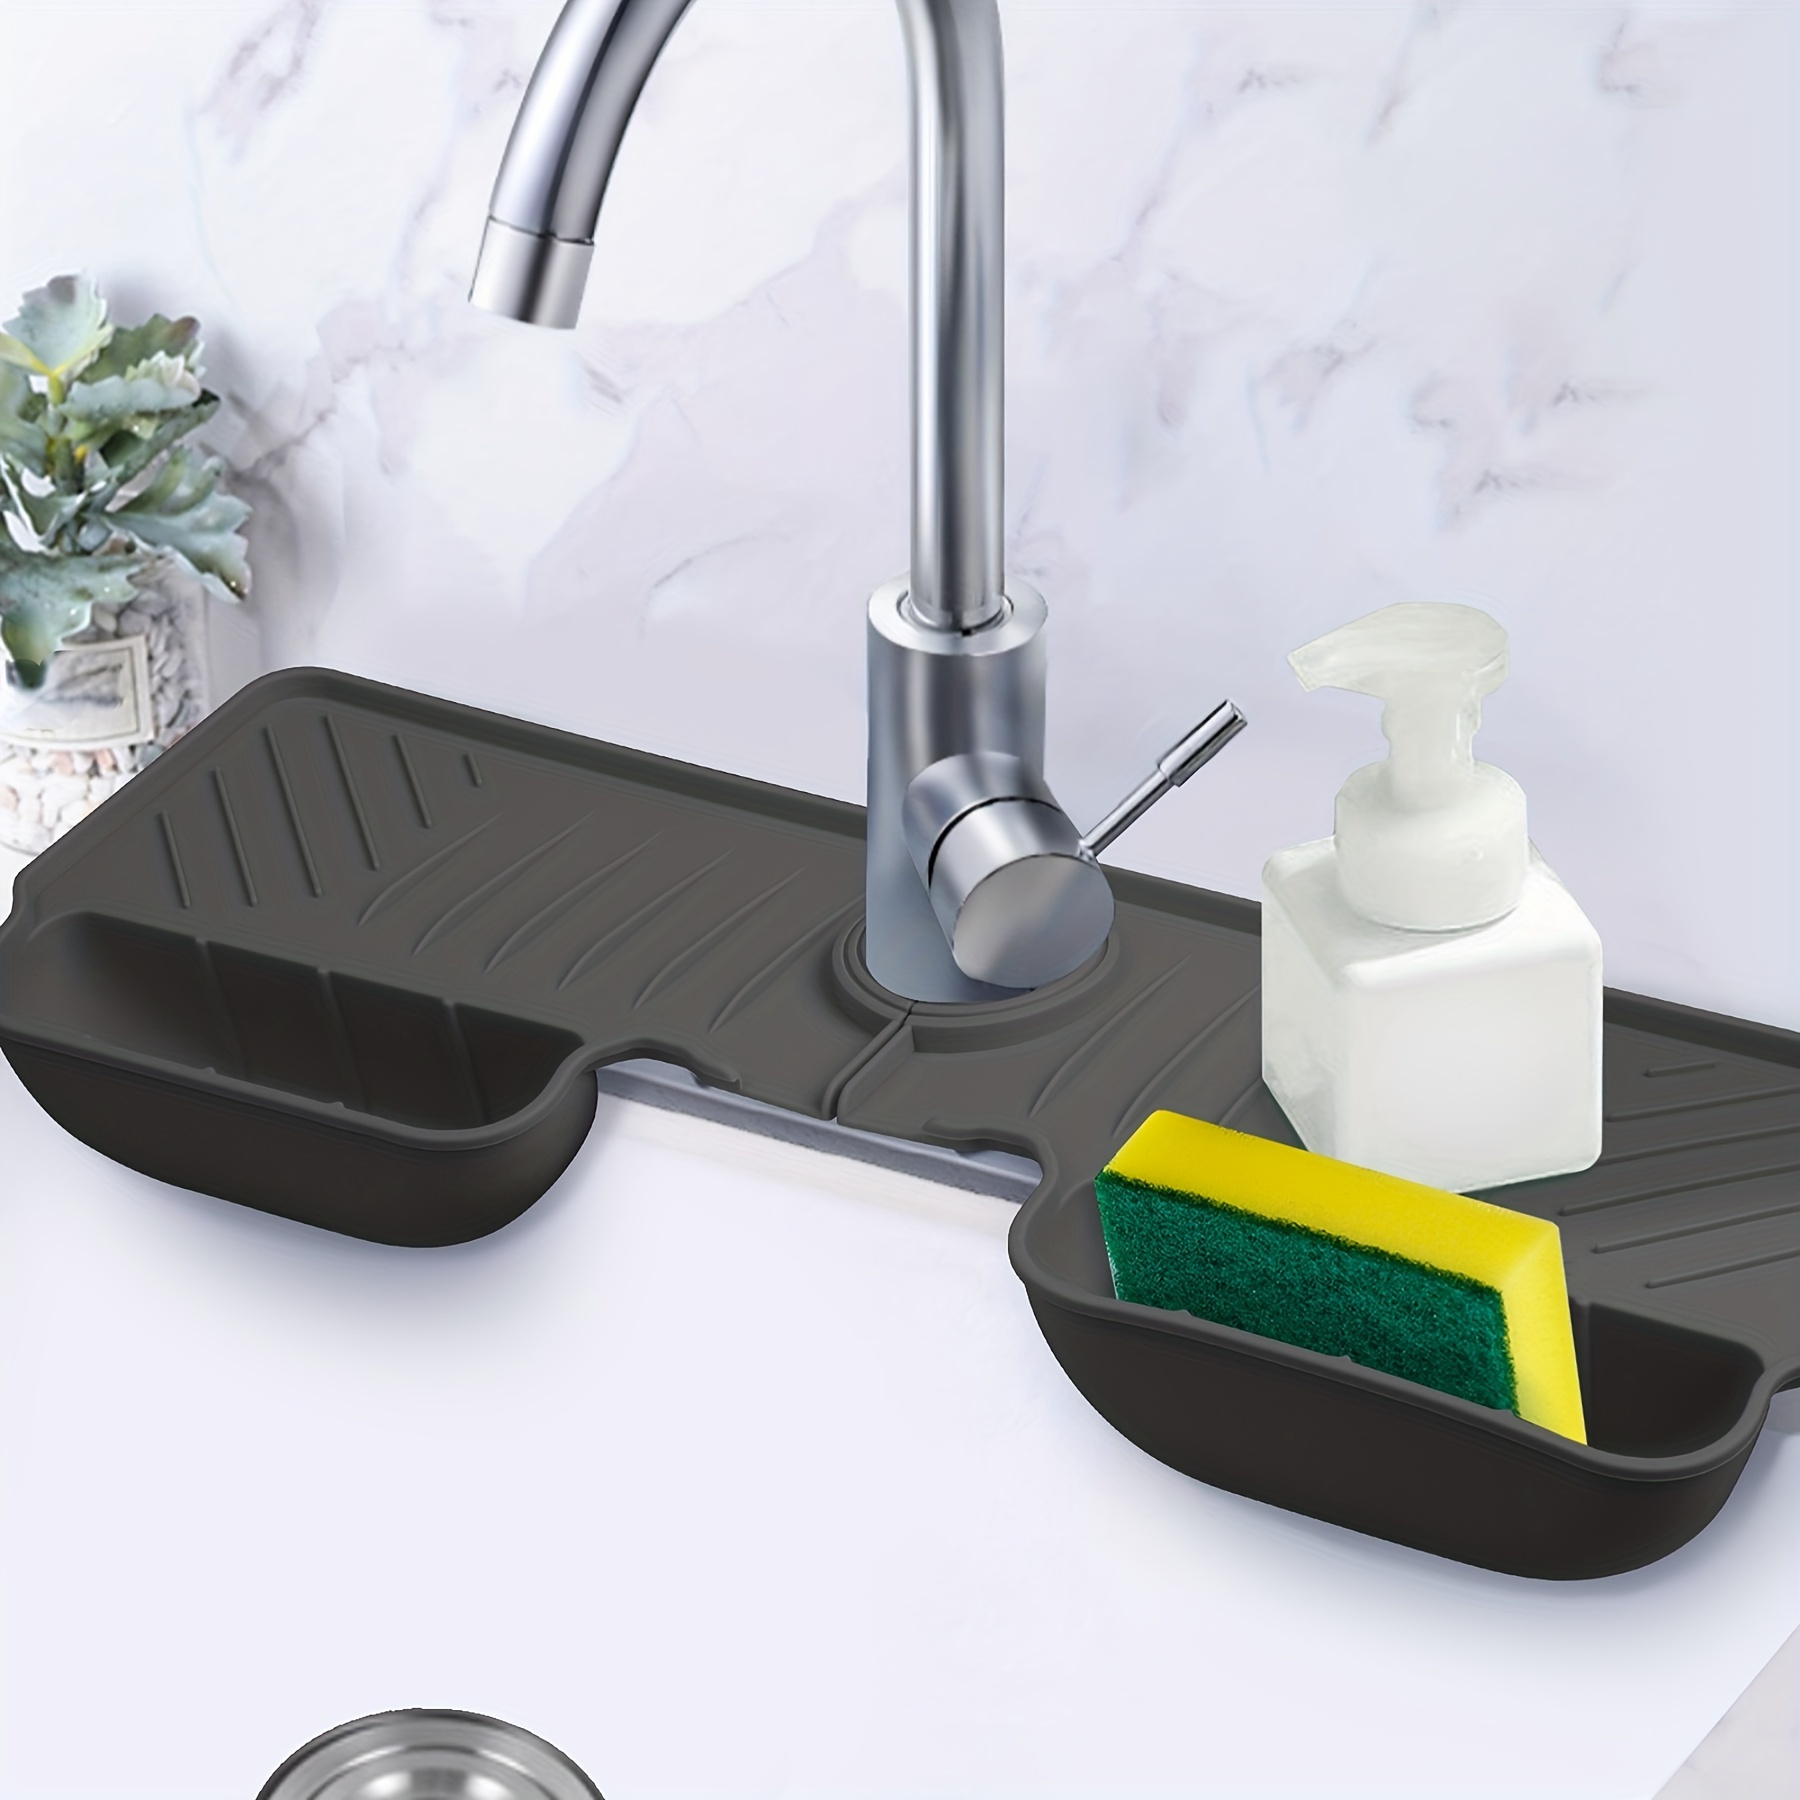 Fyydes Rubber Sink Mat,Kitchen Sink Mat 2PCS Food Grade Rubber Material  Non‑Slip Easy to Clean Sink Protector Mat for Kitchen,Sink Mat